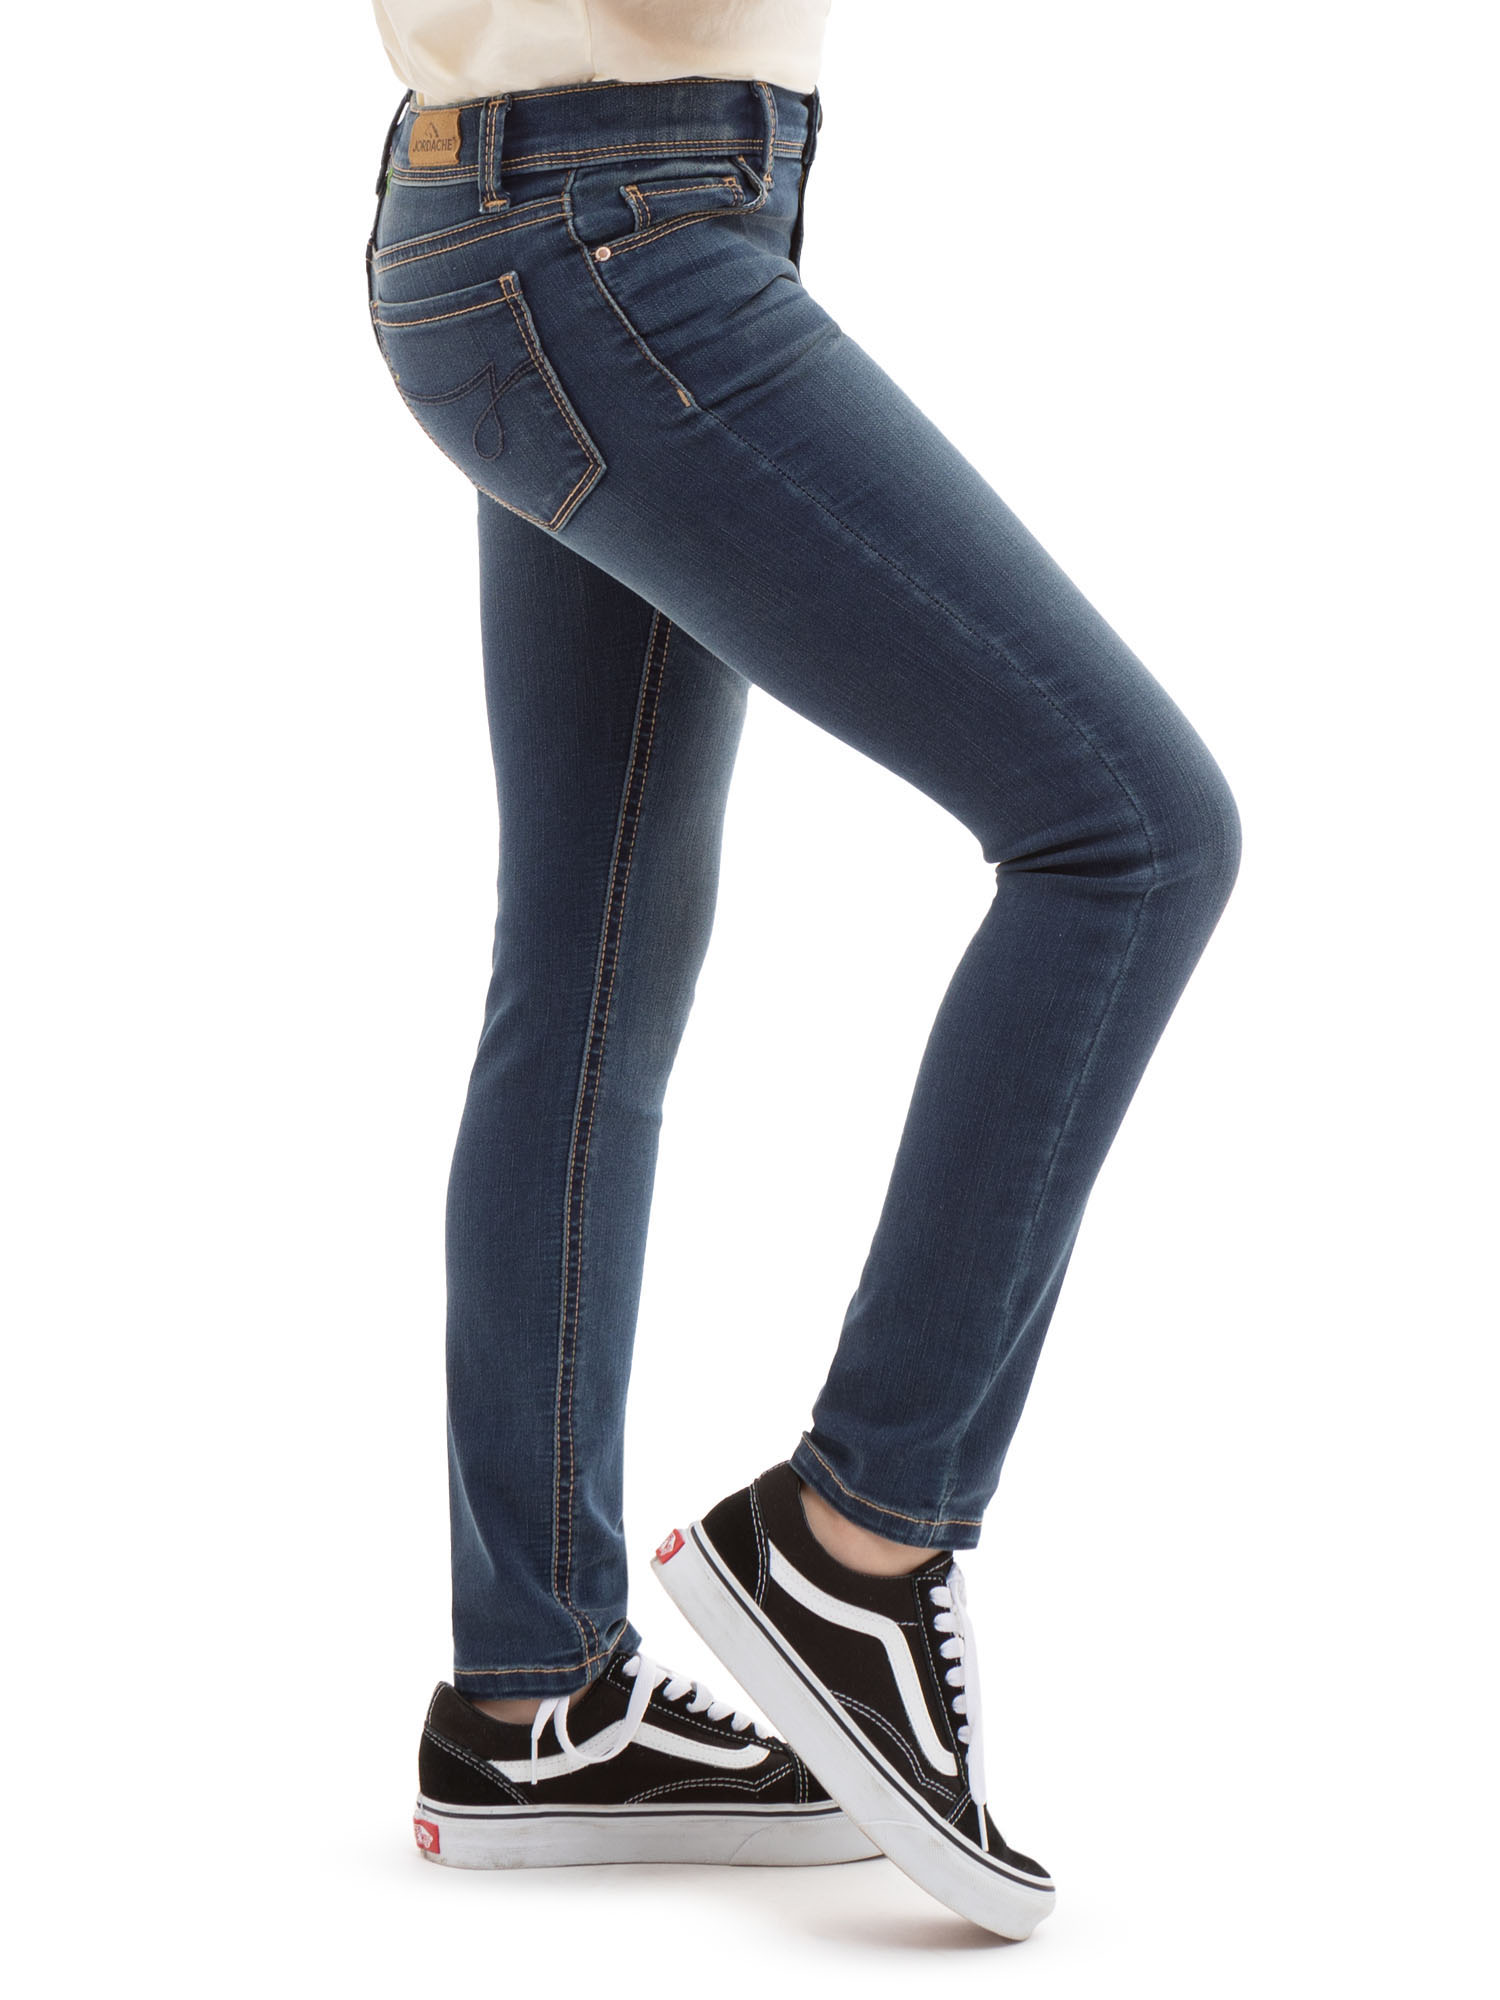 Jordache Girls Skinny Jeans, Sizes 5-18 - image 3 of 5